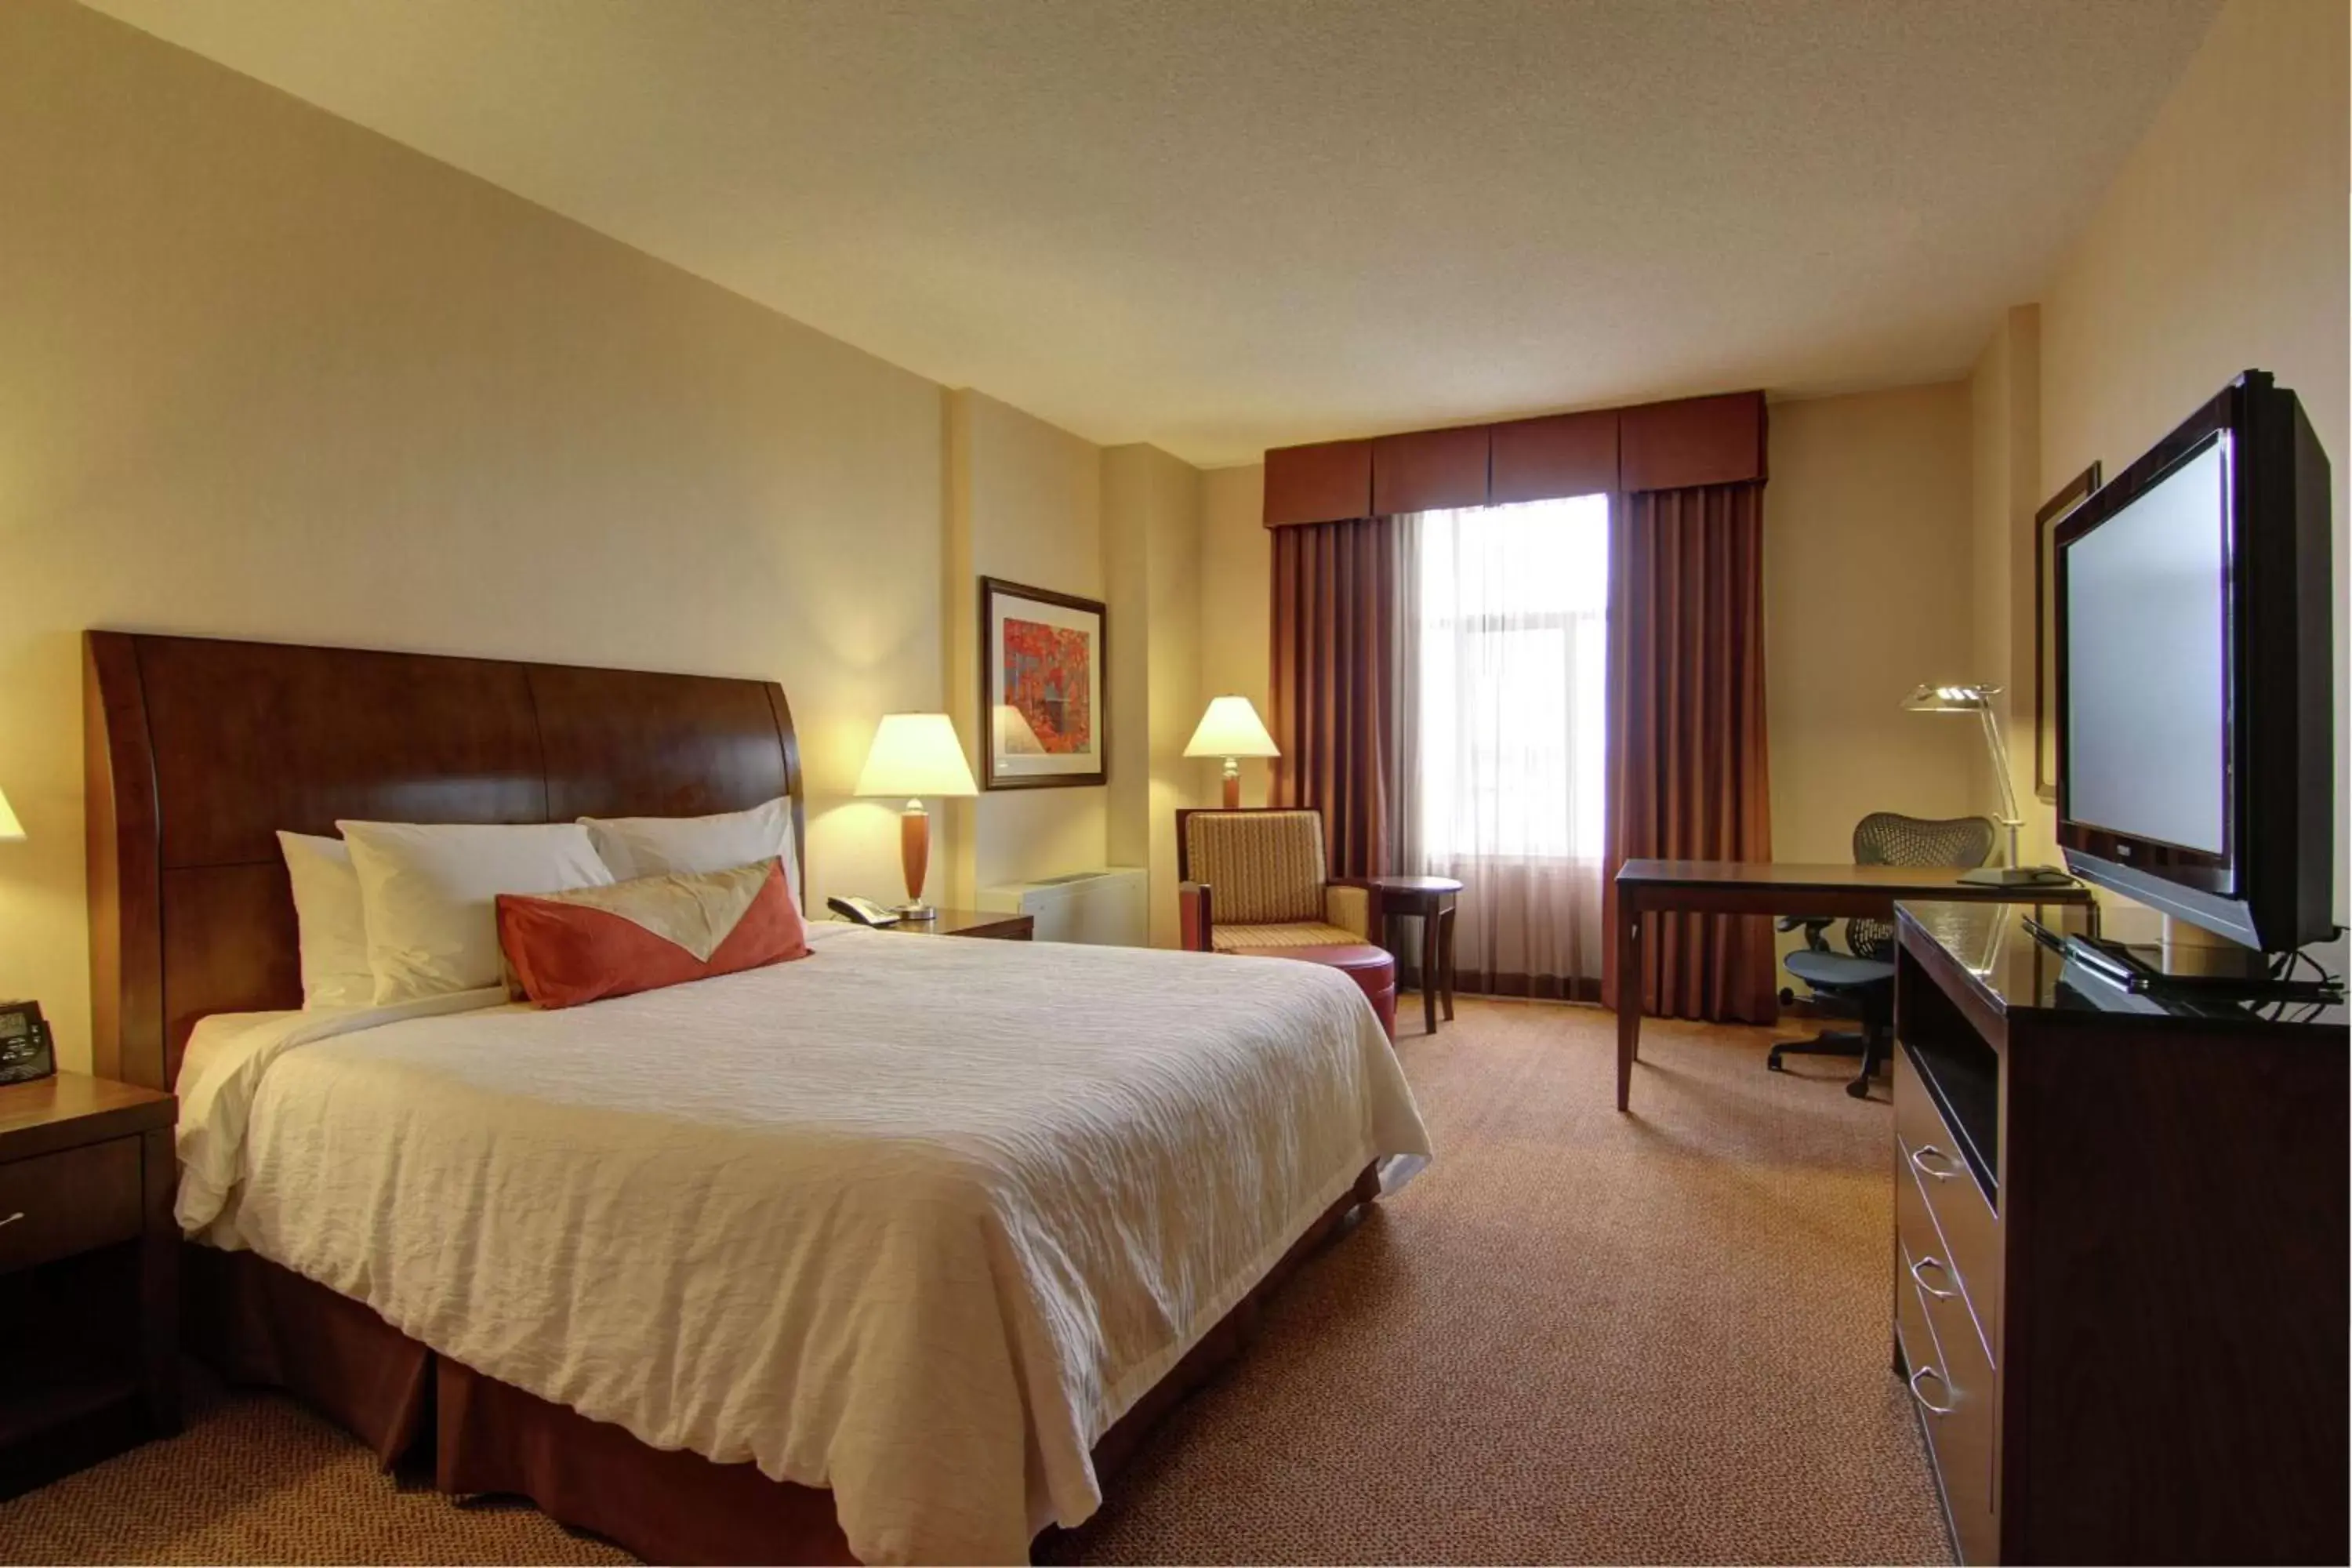 Bedroom in Hilton Garden Inn Calgary Airport